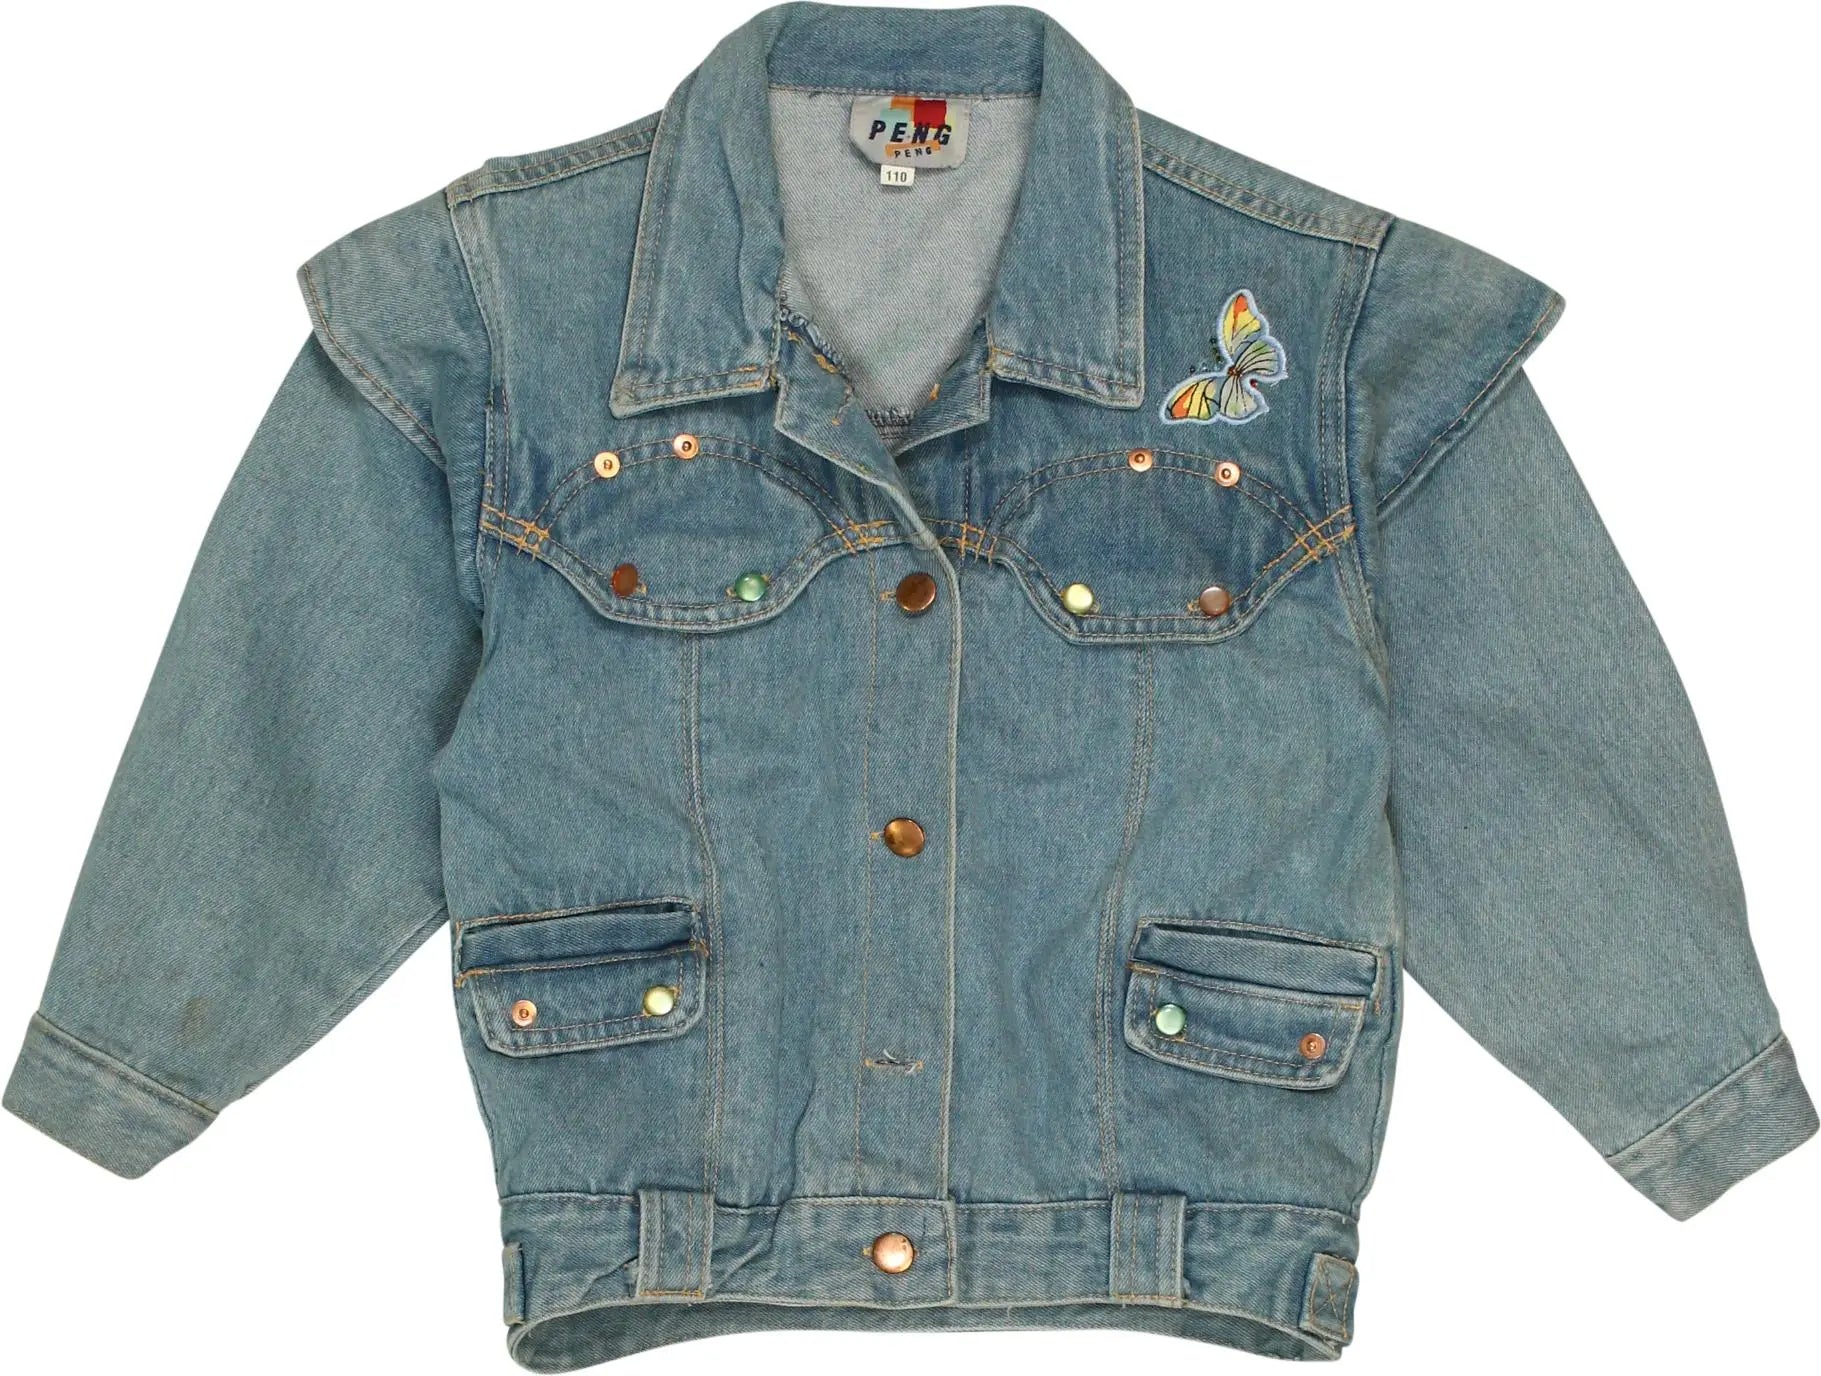 Peng - Denim Jacket- ThriftTale.com - Vintage and second handclothing